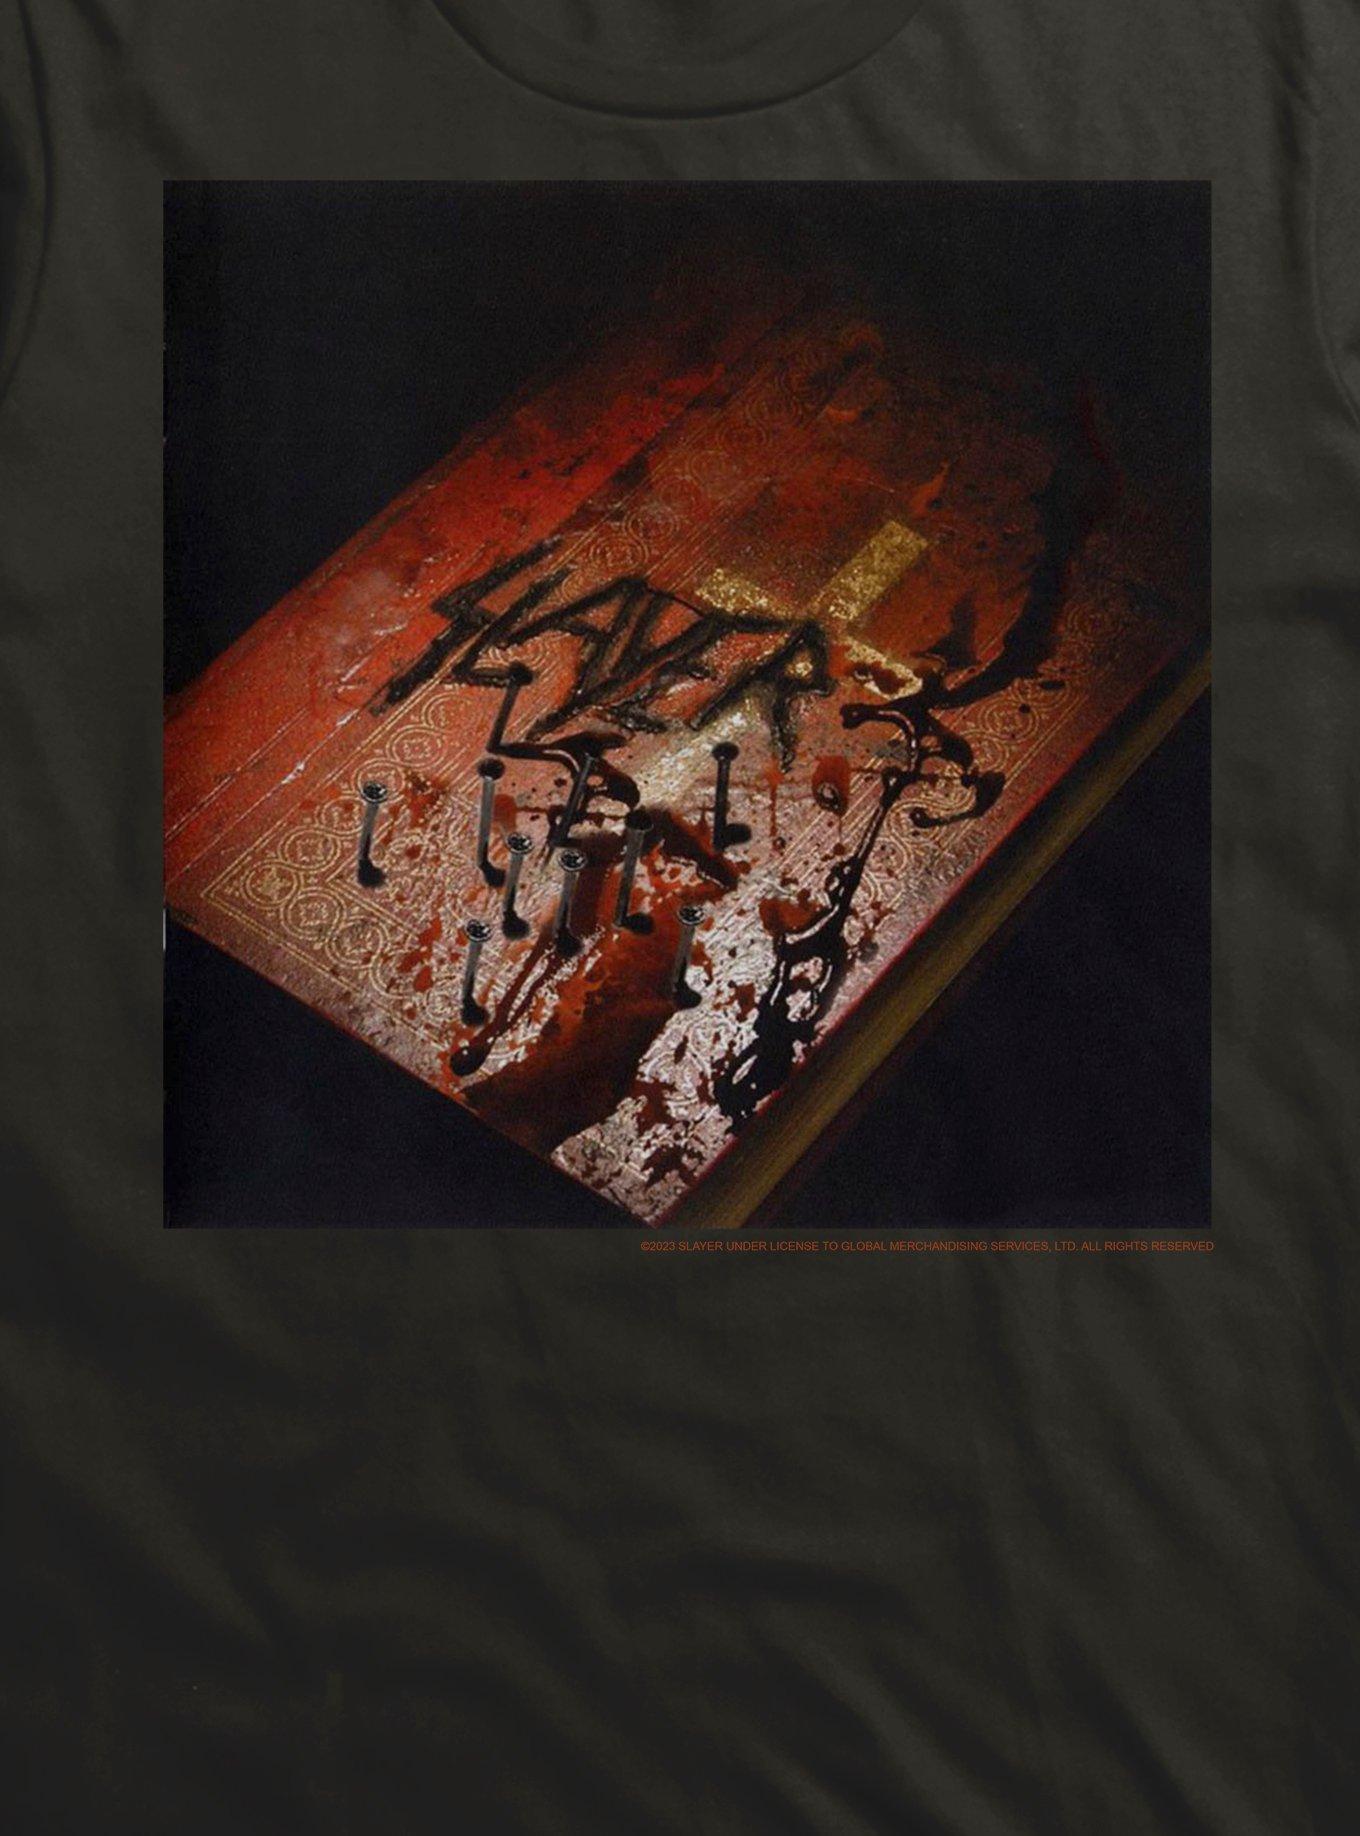 Slayer God Hates Us All T-Shirt, BLACK, alternate